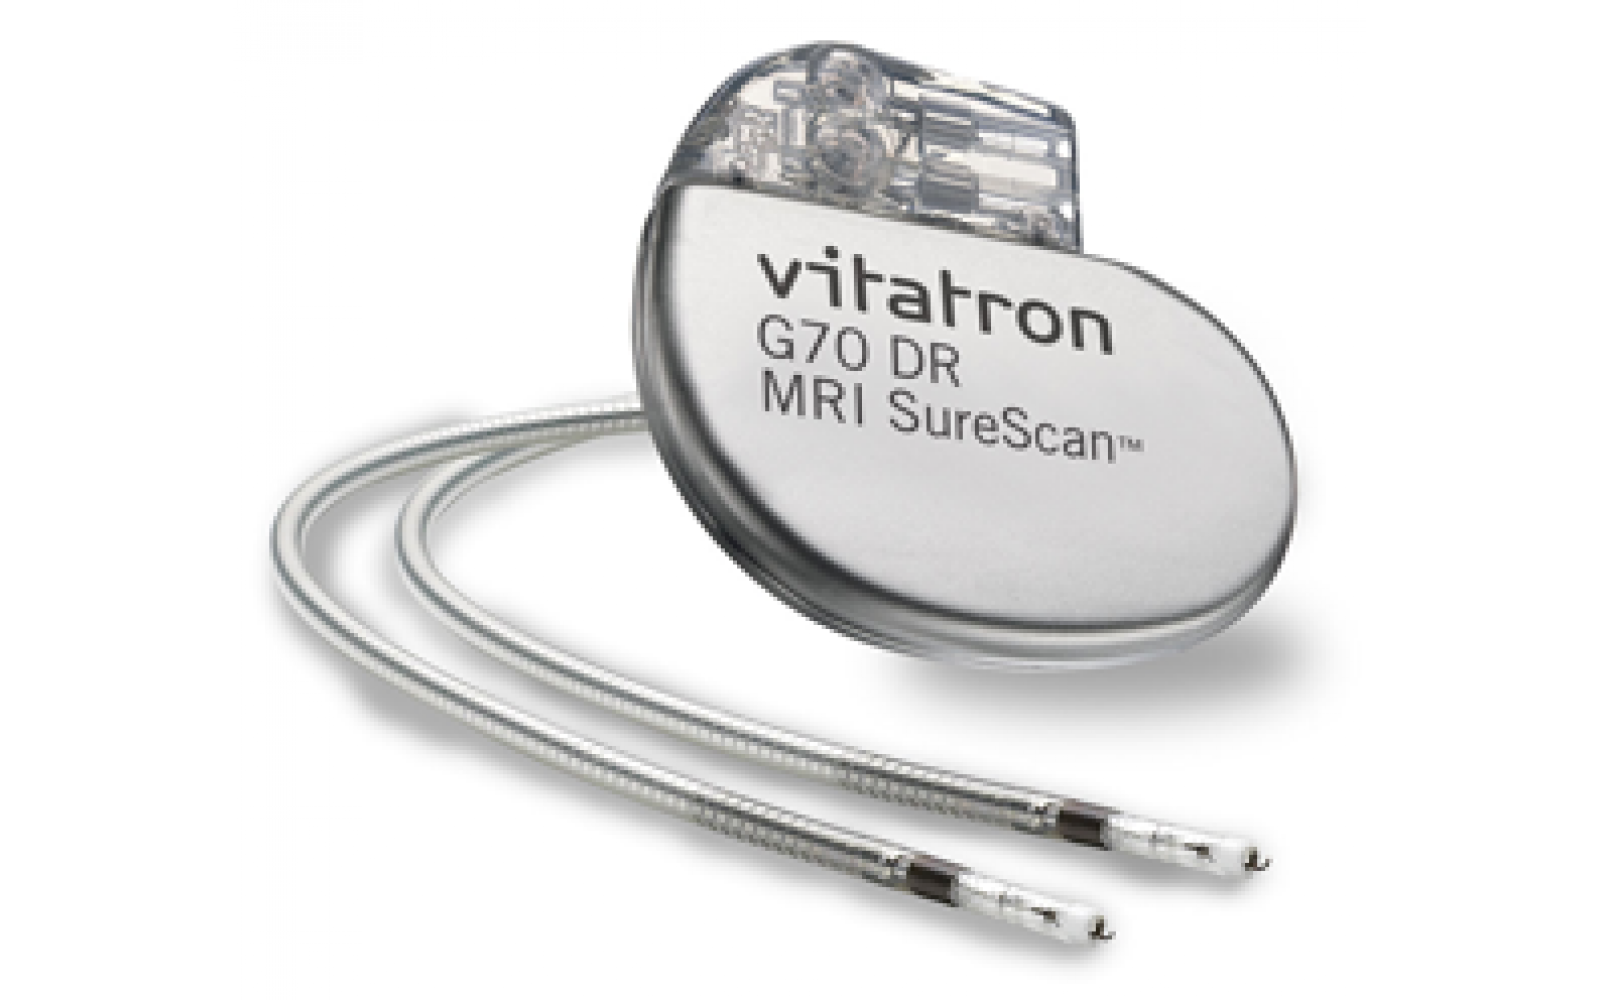 Vitatron G70 DR Dual Pacemaker System